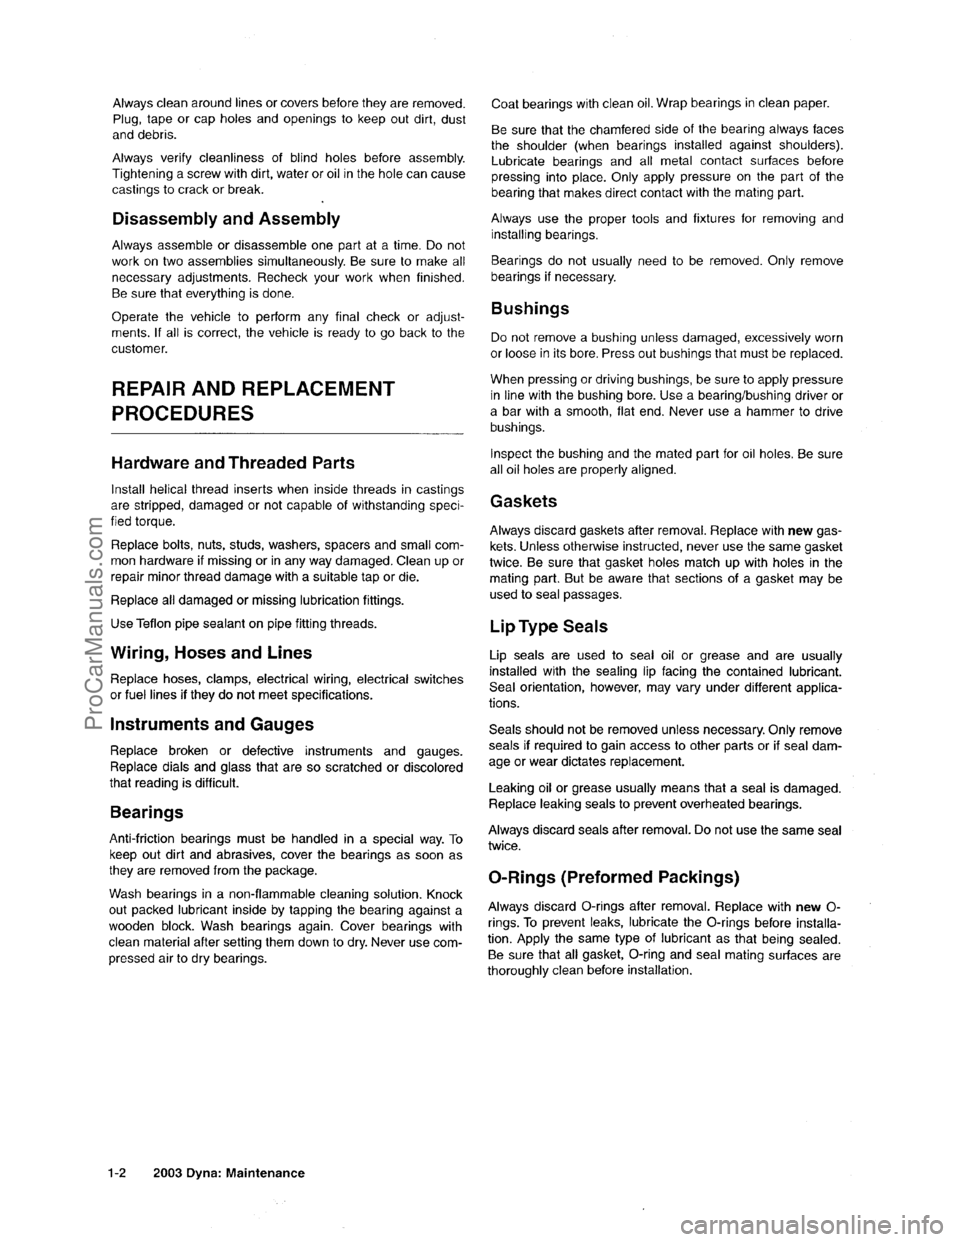 HARLEY-DAVIDSON DYNA GLIDE 2003 User Guide  [4]
ProCarManuals.com 